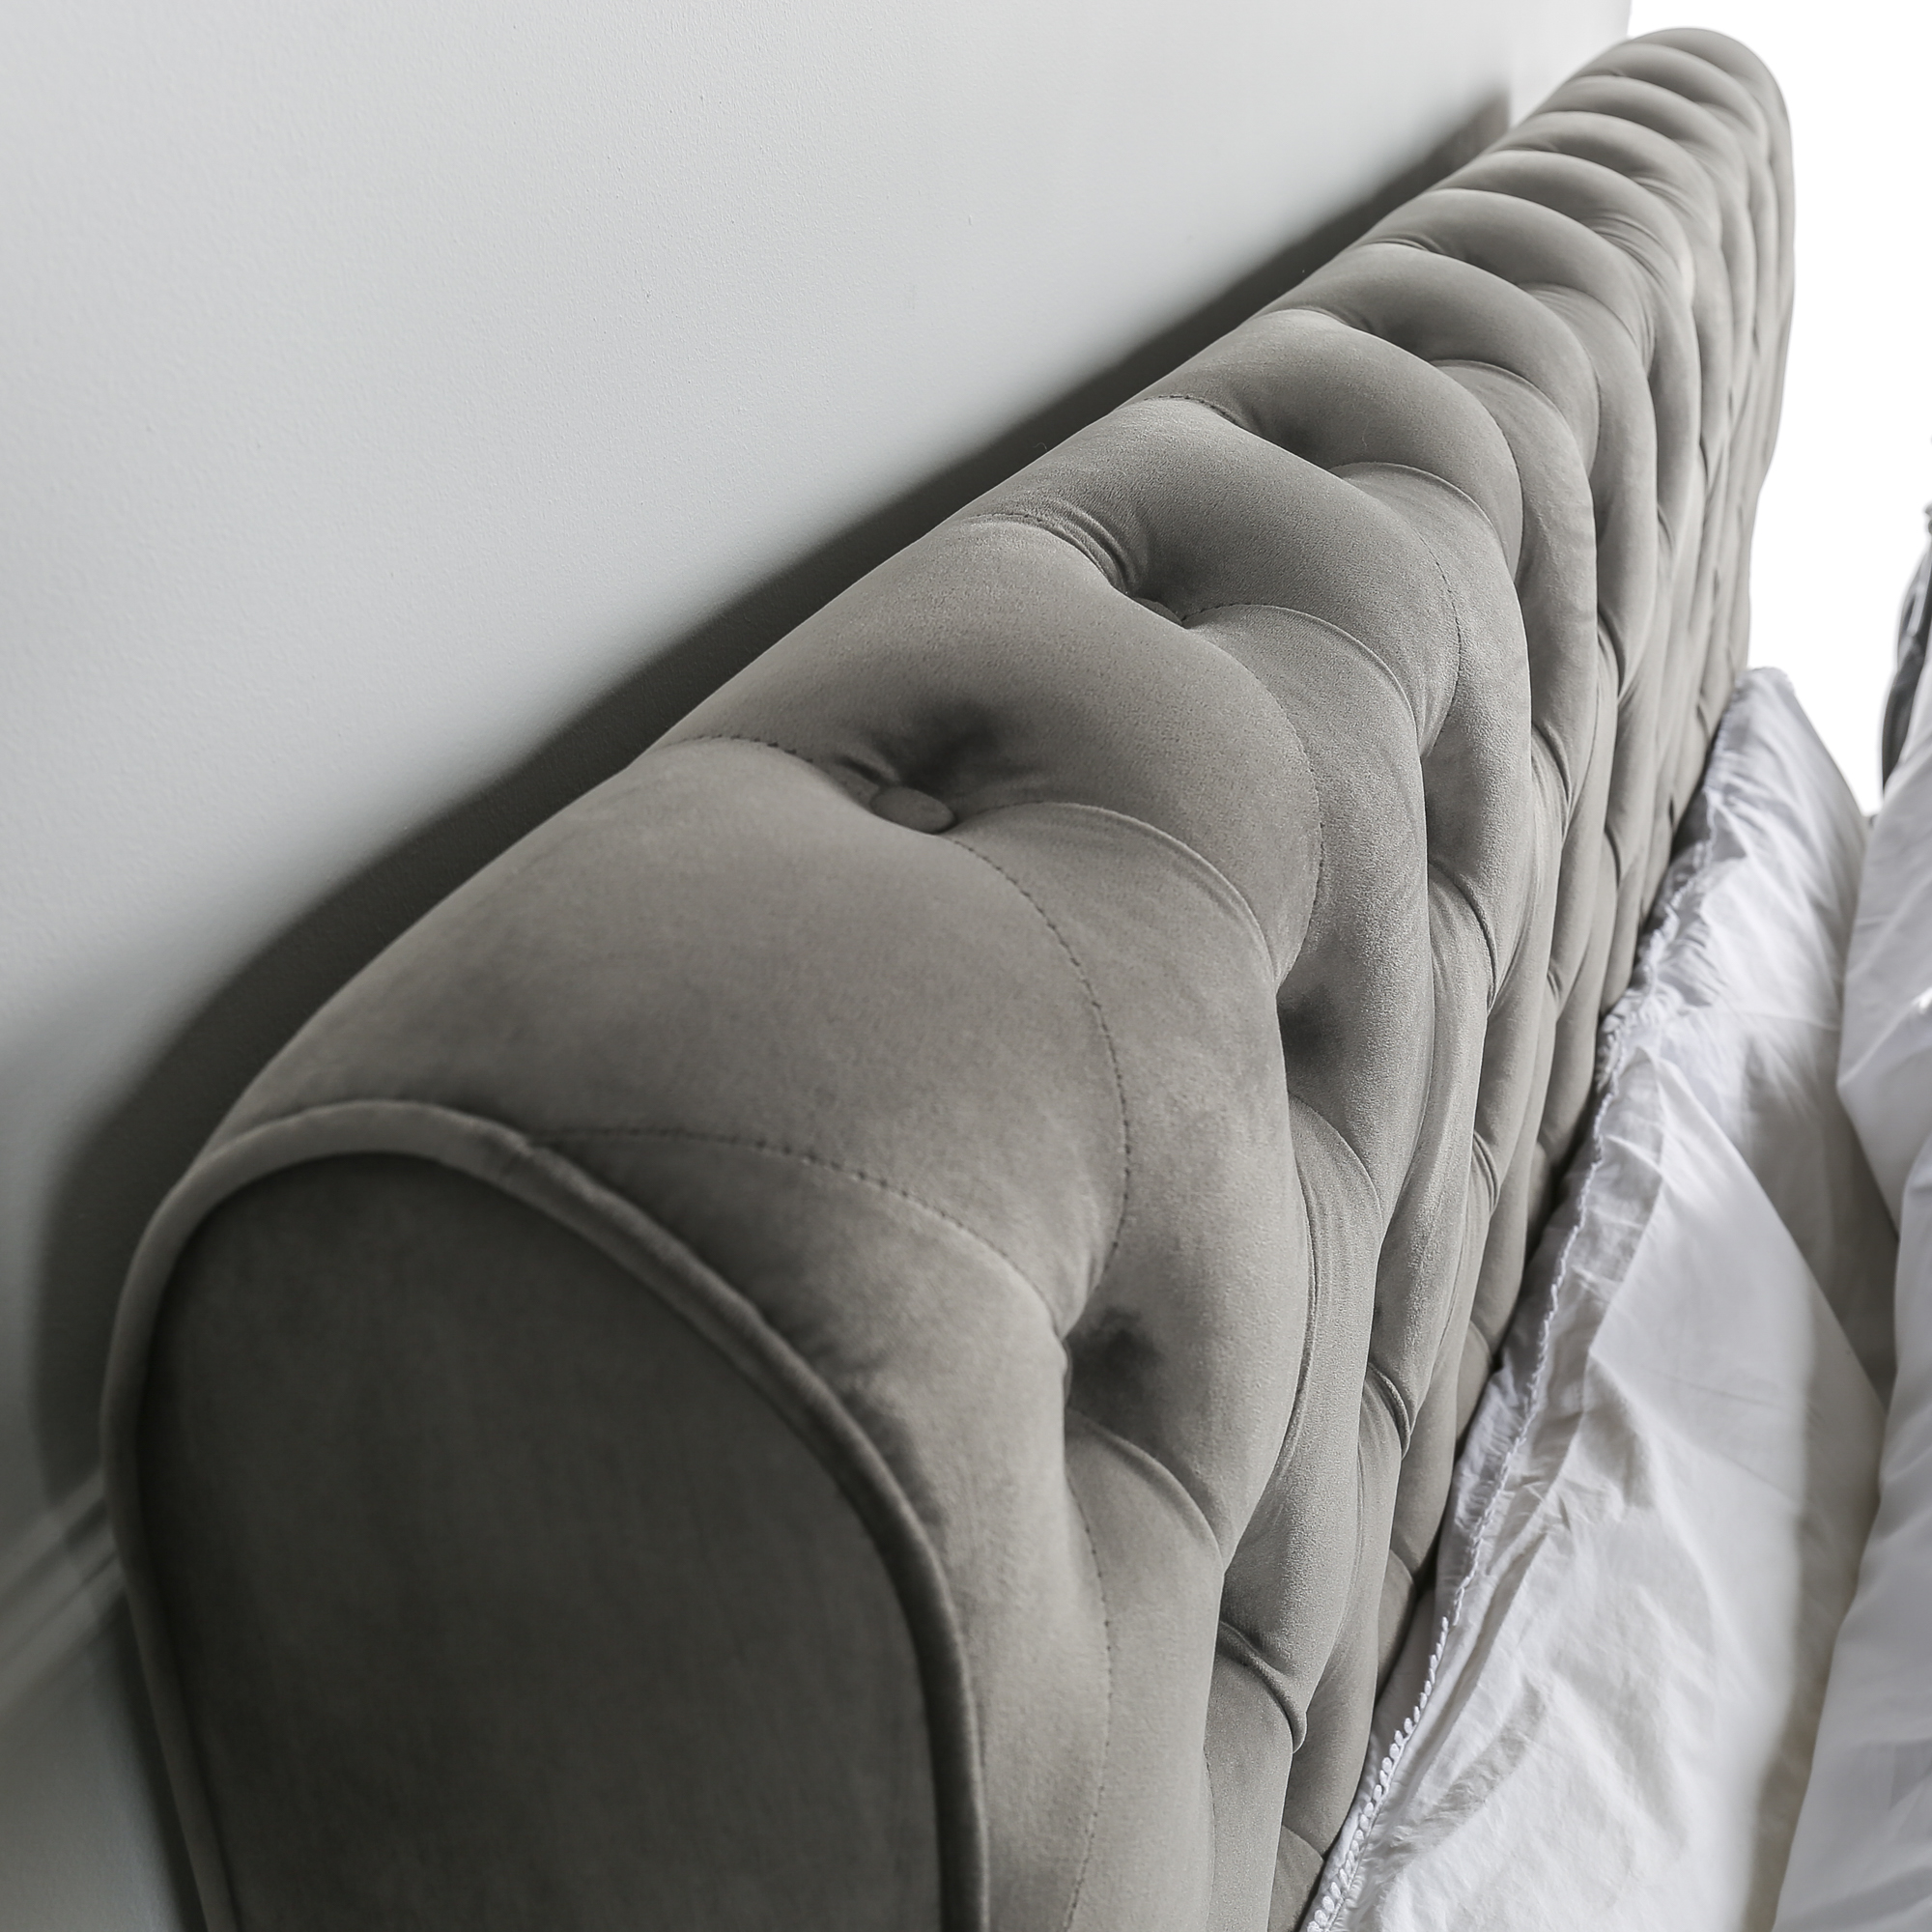 Luxurious Grey Velvet Chesterfield King Size Bed